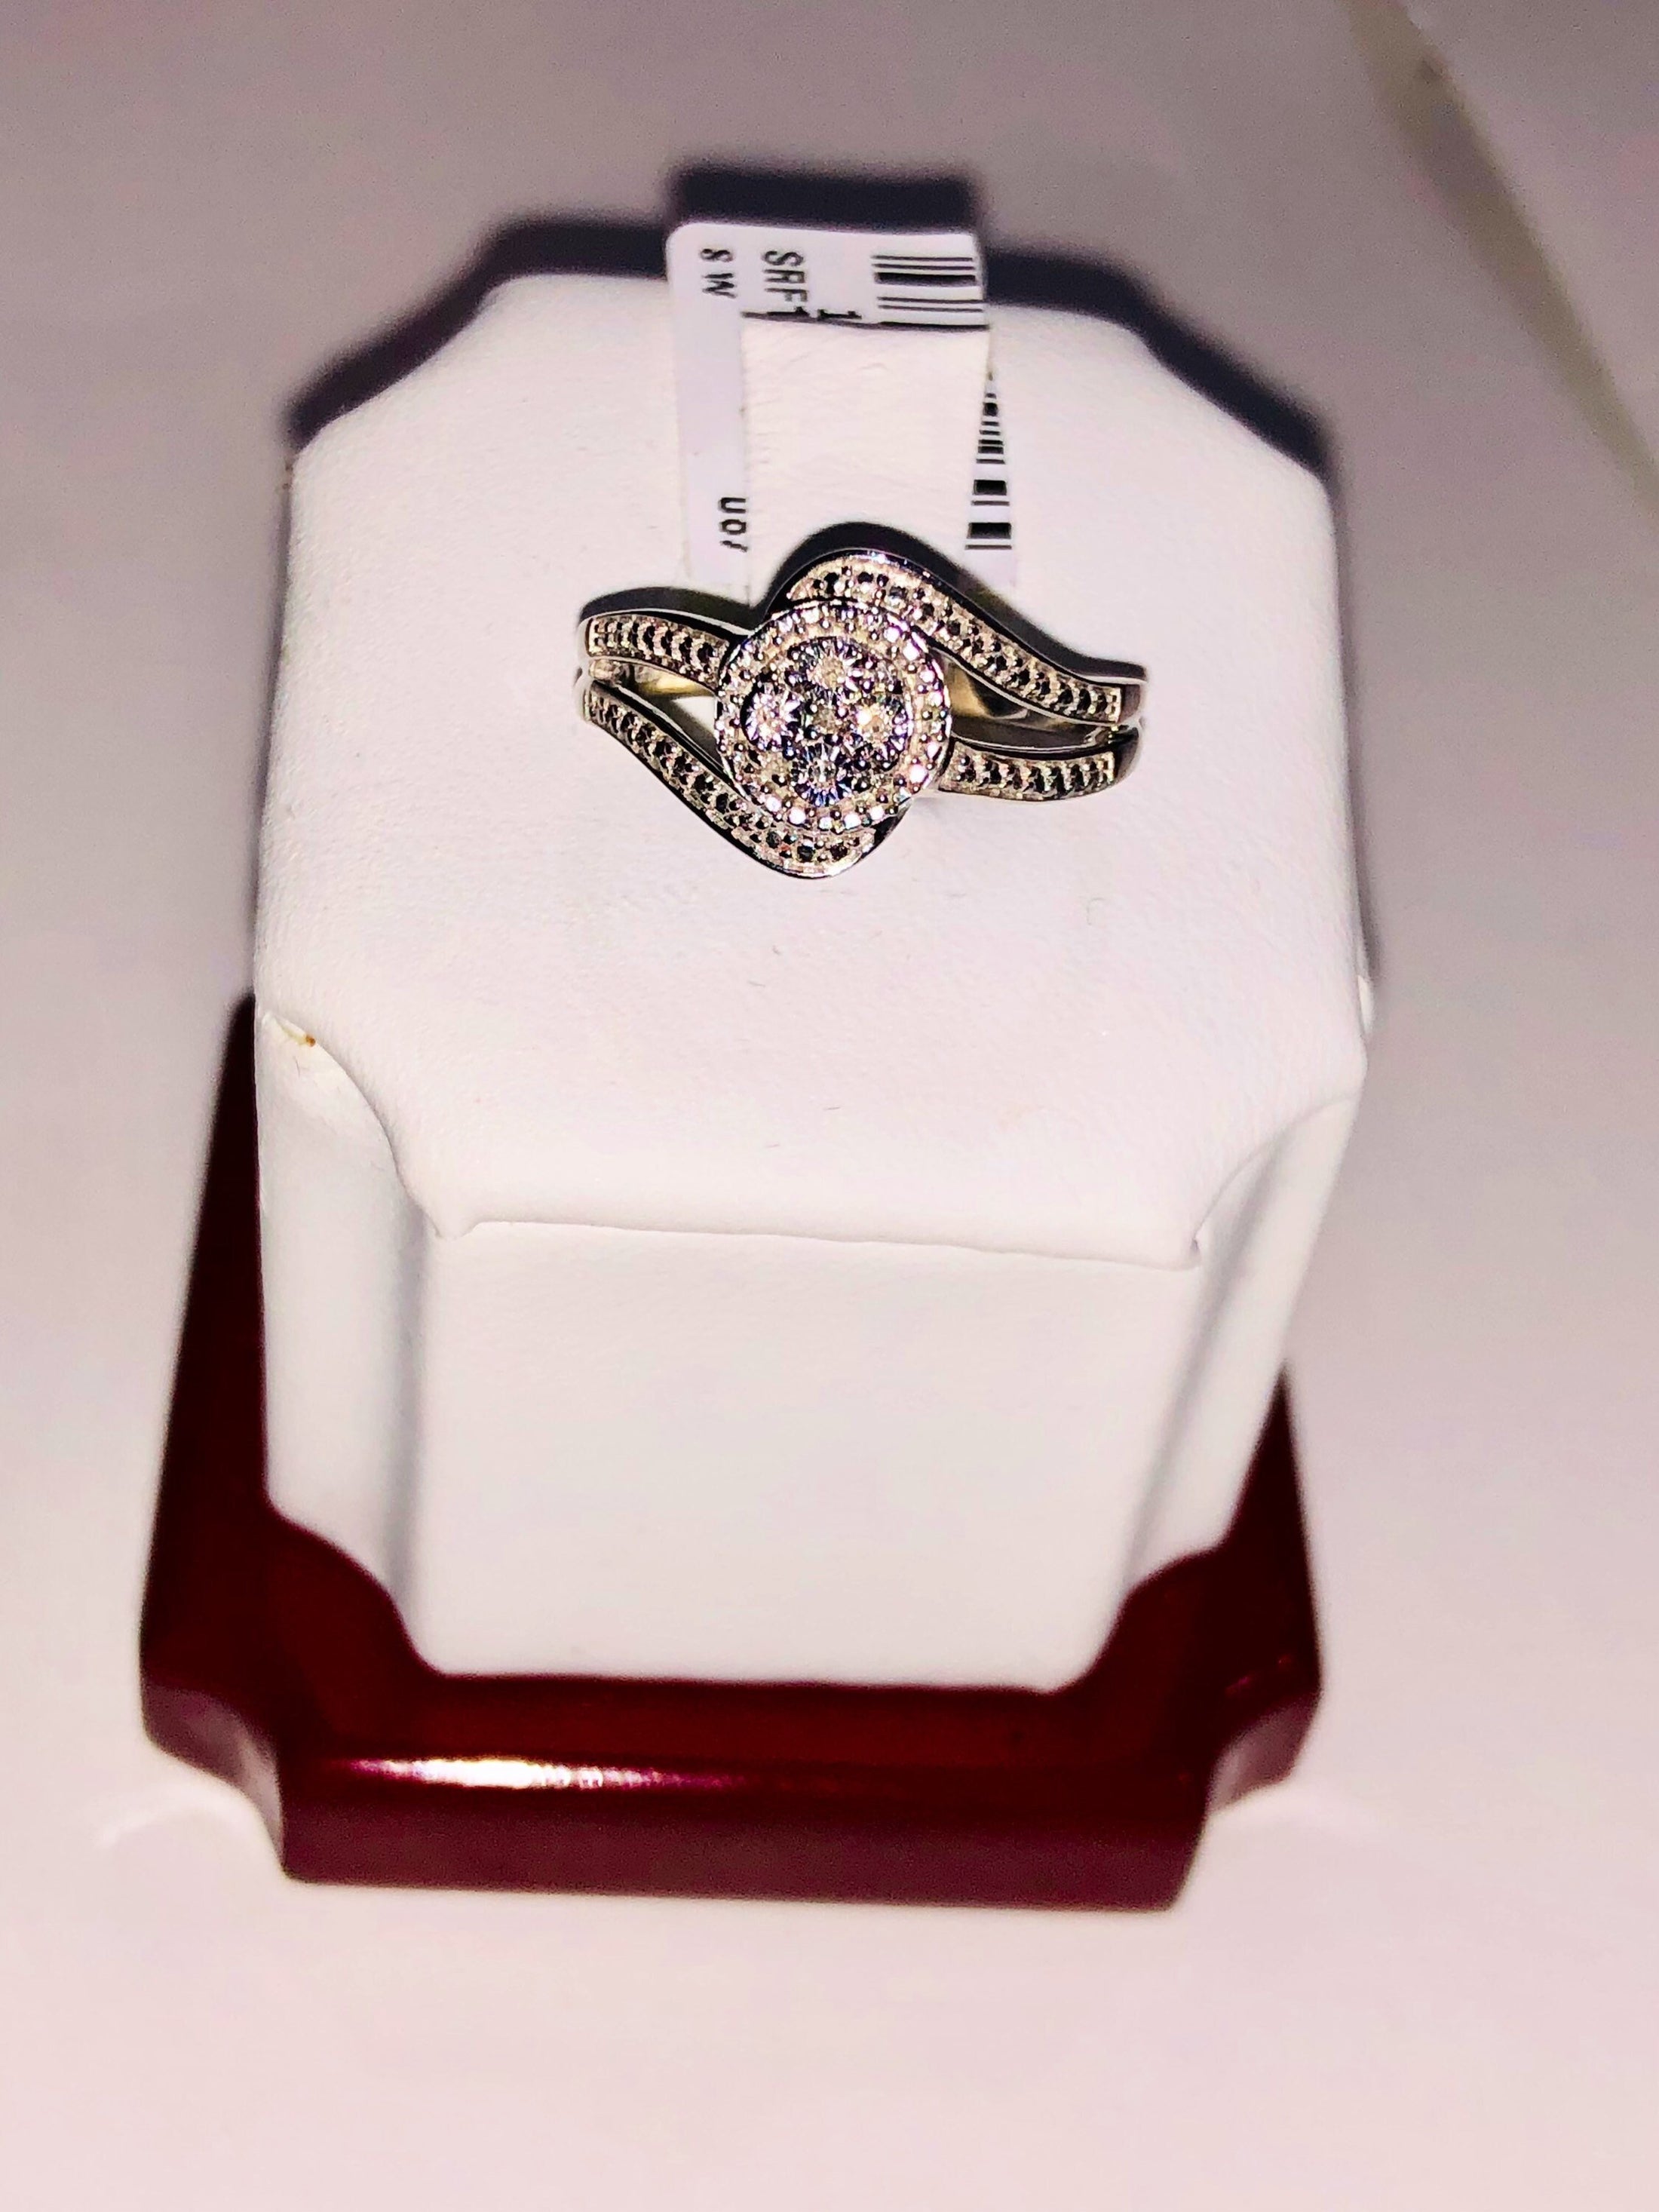 Real genuine natural diamond promise ring - engagement ring- wedding ring- anniversary birthday gift beautiful huge sale 100% real diamonds